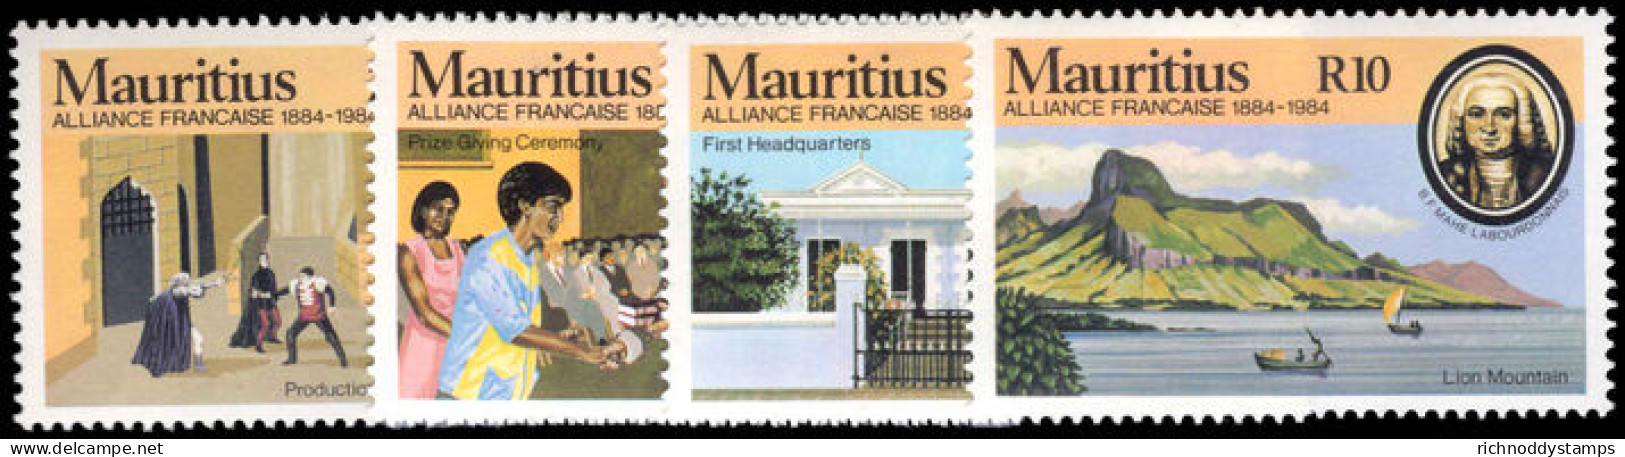 Mauritius 1984 Centenary Of Alliance Francaise Unmounted Mint. - Mauritius (1968-...)